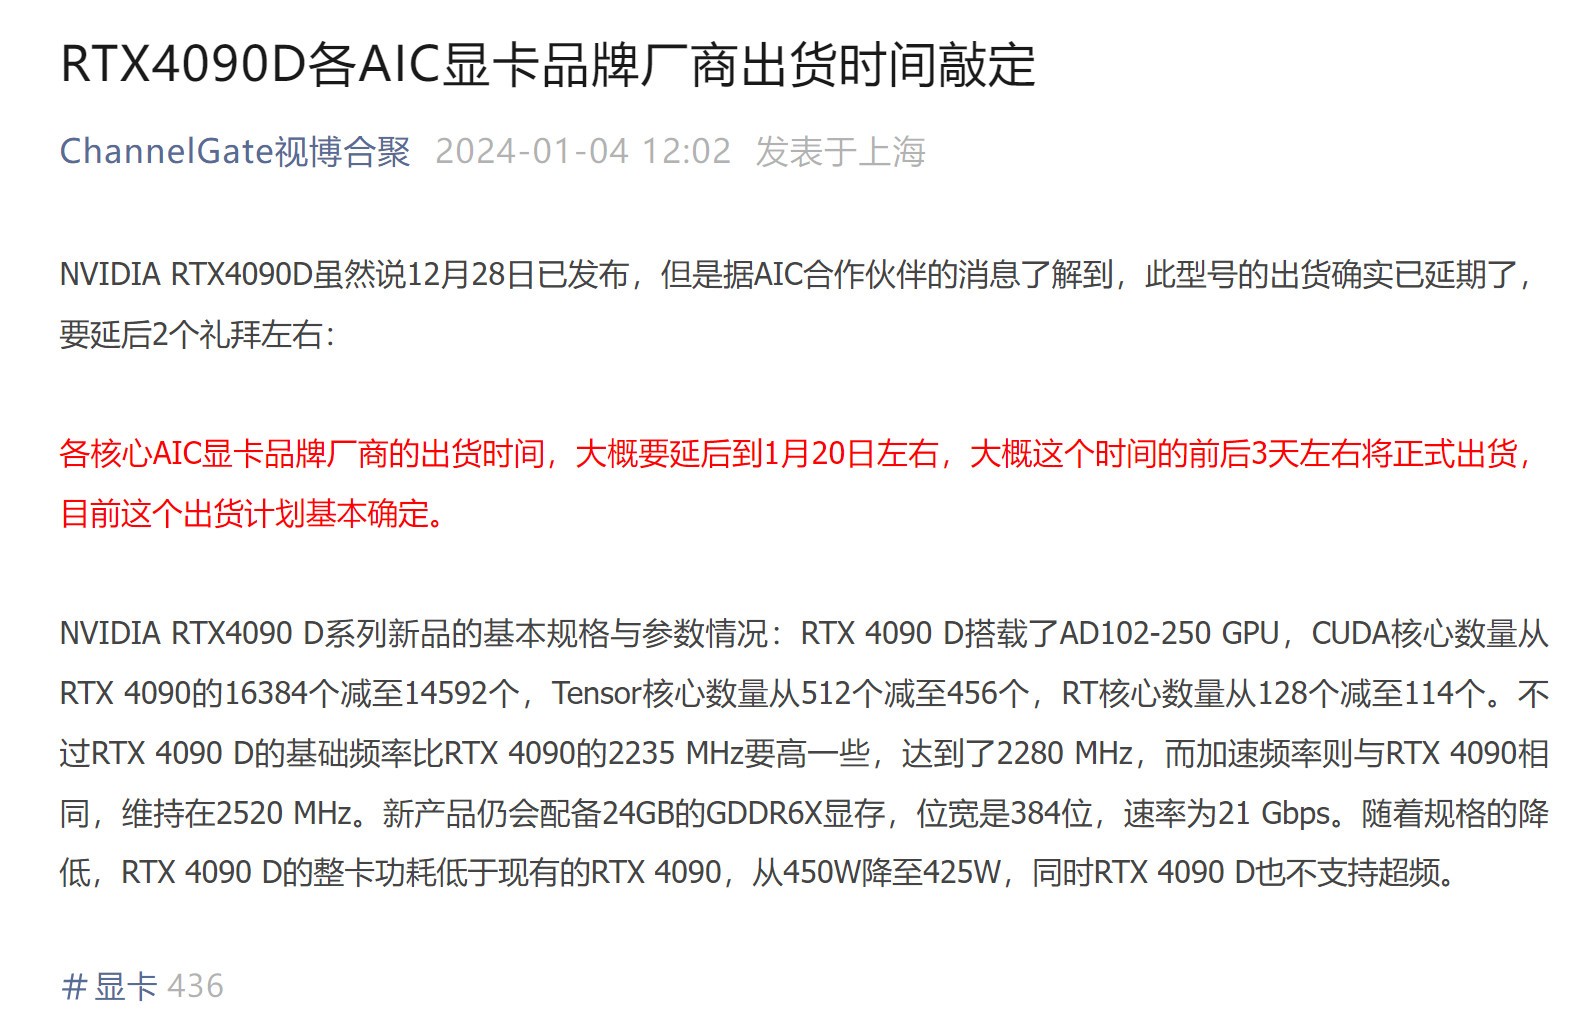 RTX 4090 D显卡出货时间延后 已推迟到1月20日左右